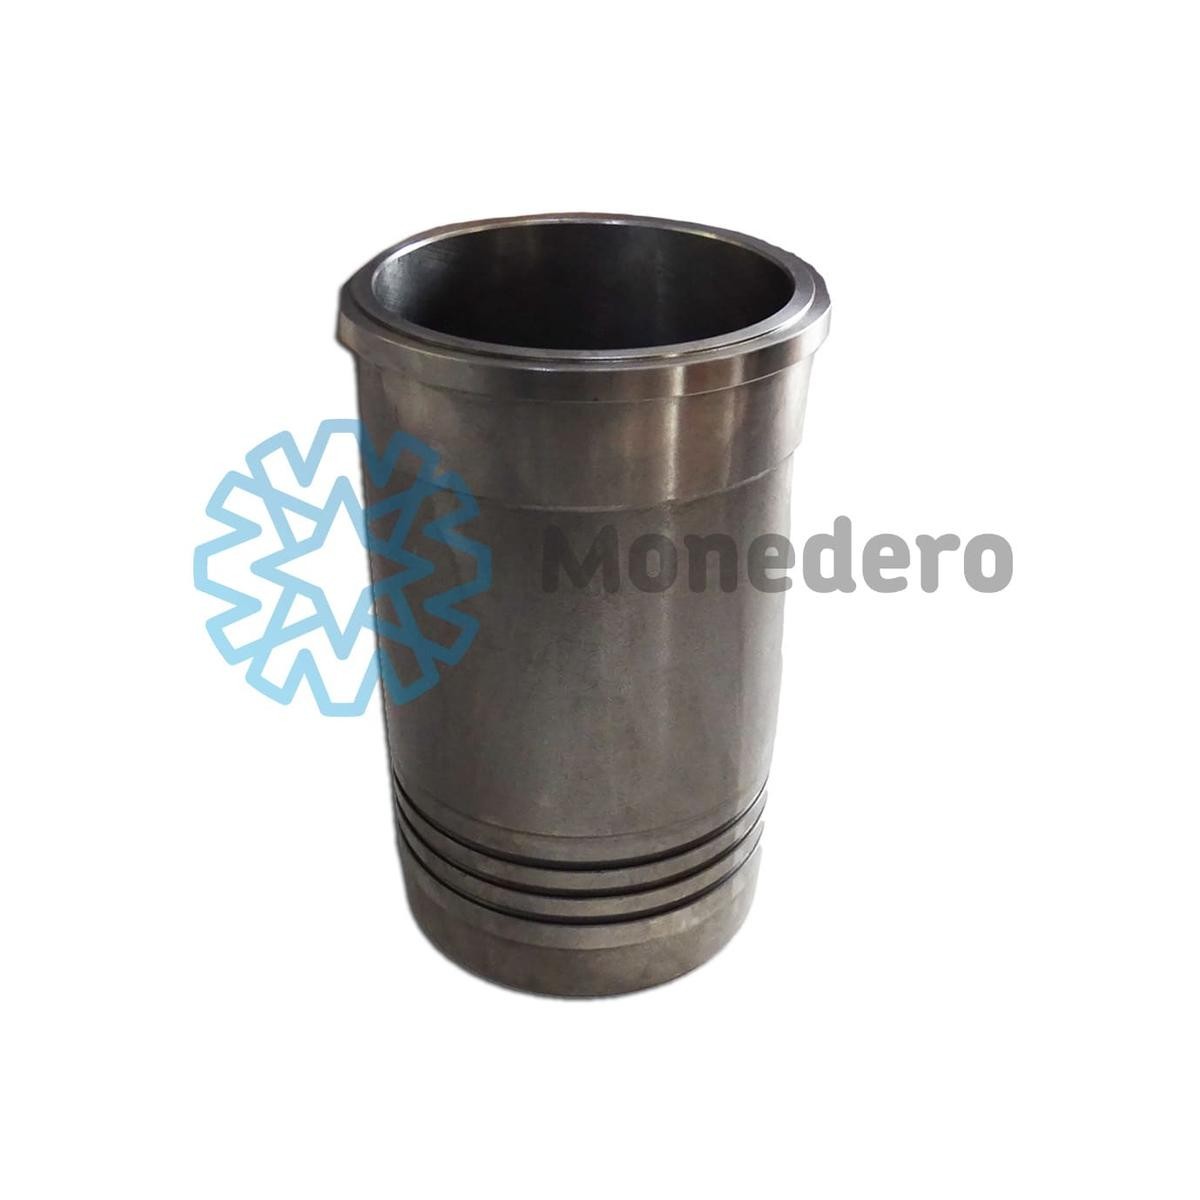 MONEDERO 30011300003 Cylinder Sleeve 500054922